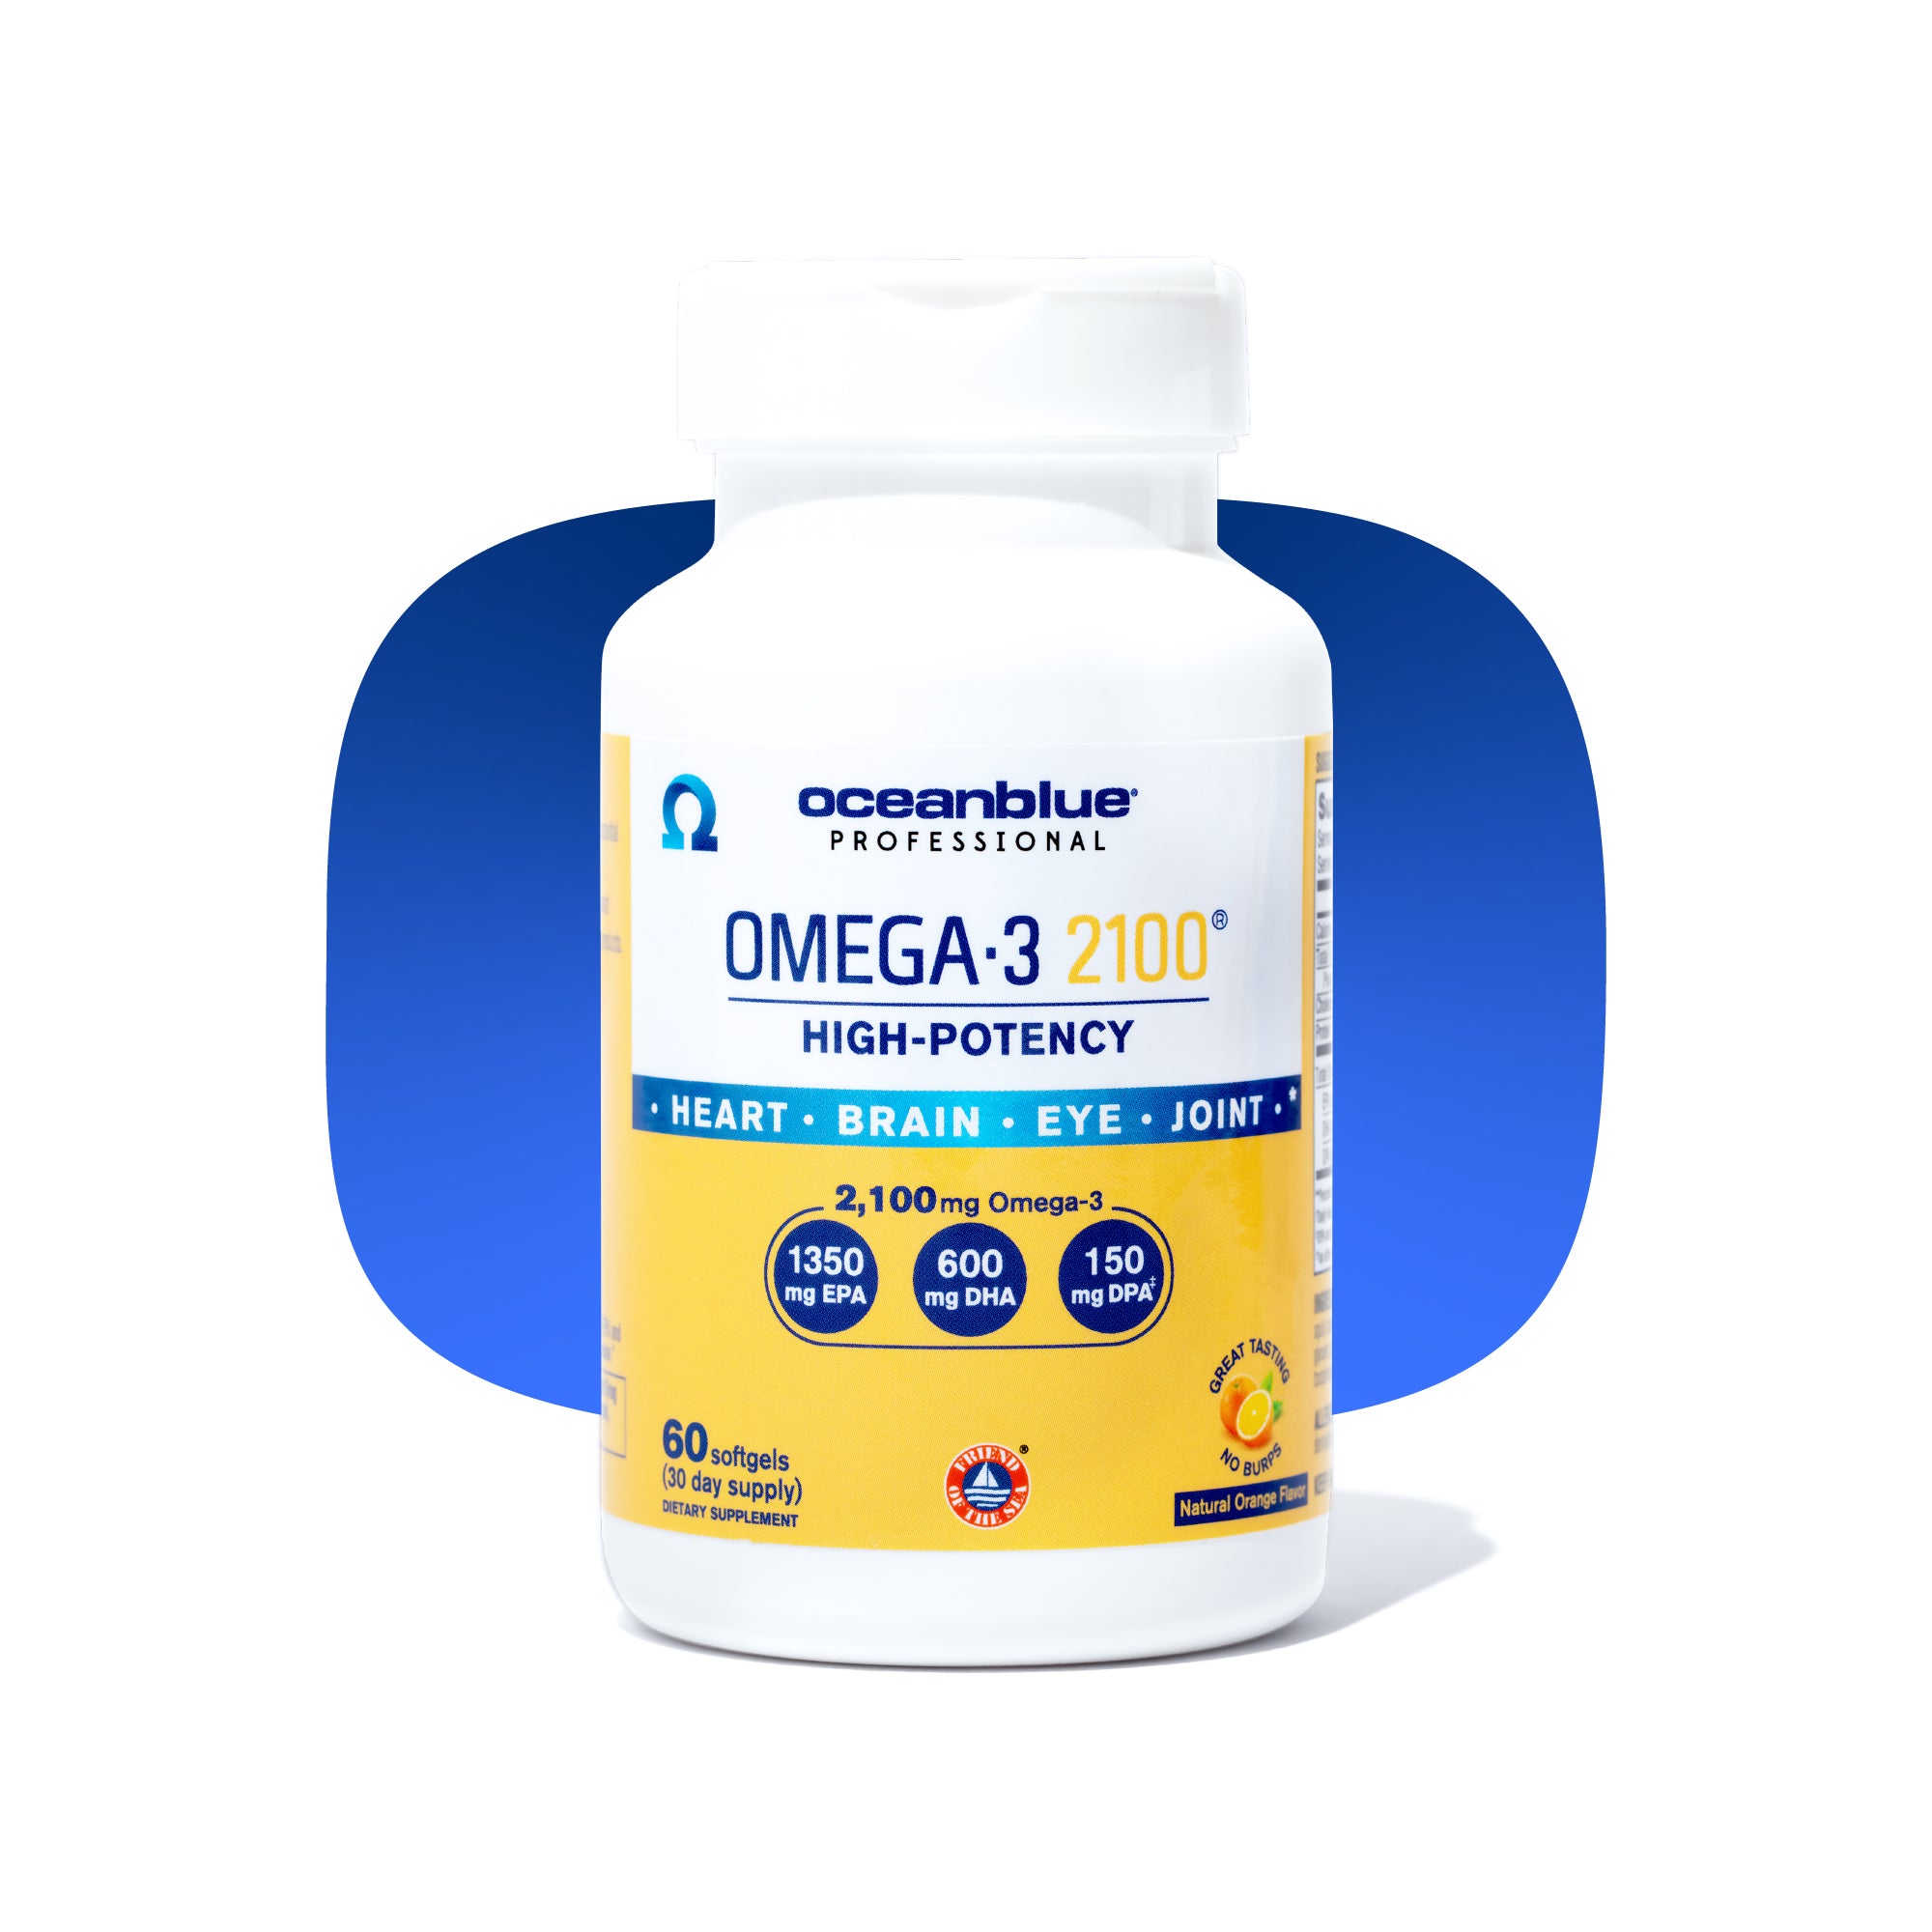 Omega-3 Premium Fish Oil, 2000 mg, 100 Fish Gelatin Softgels (180 EPA / 120  DHA per